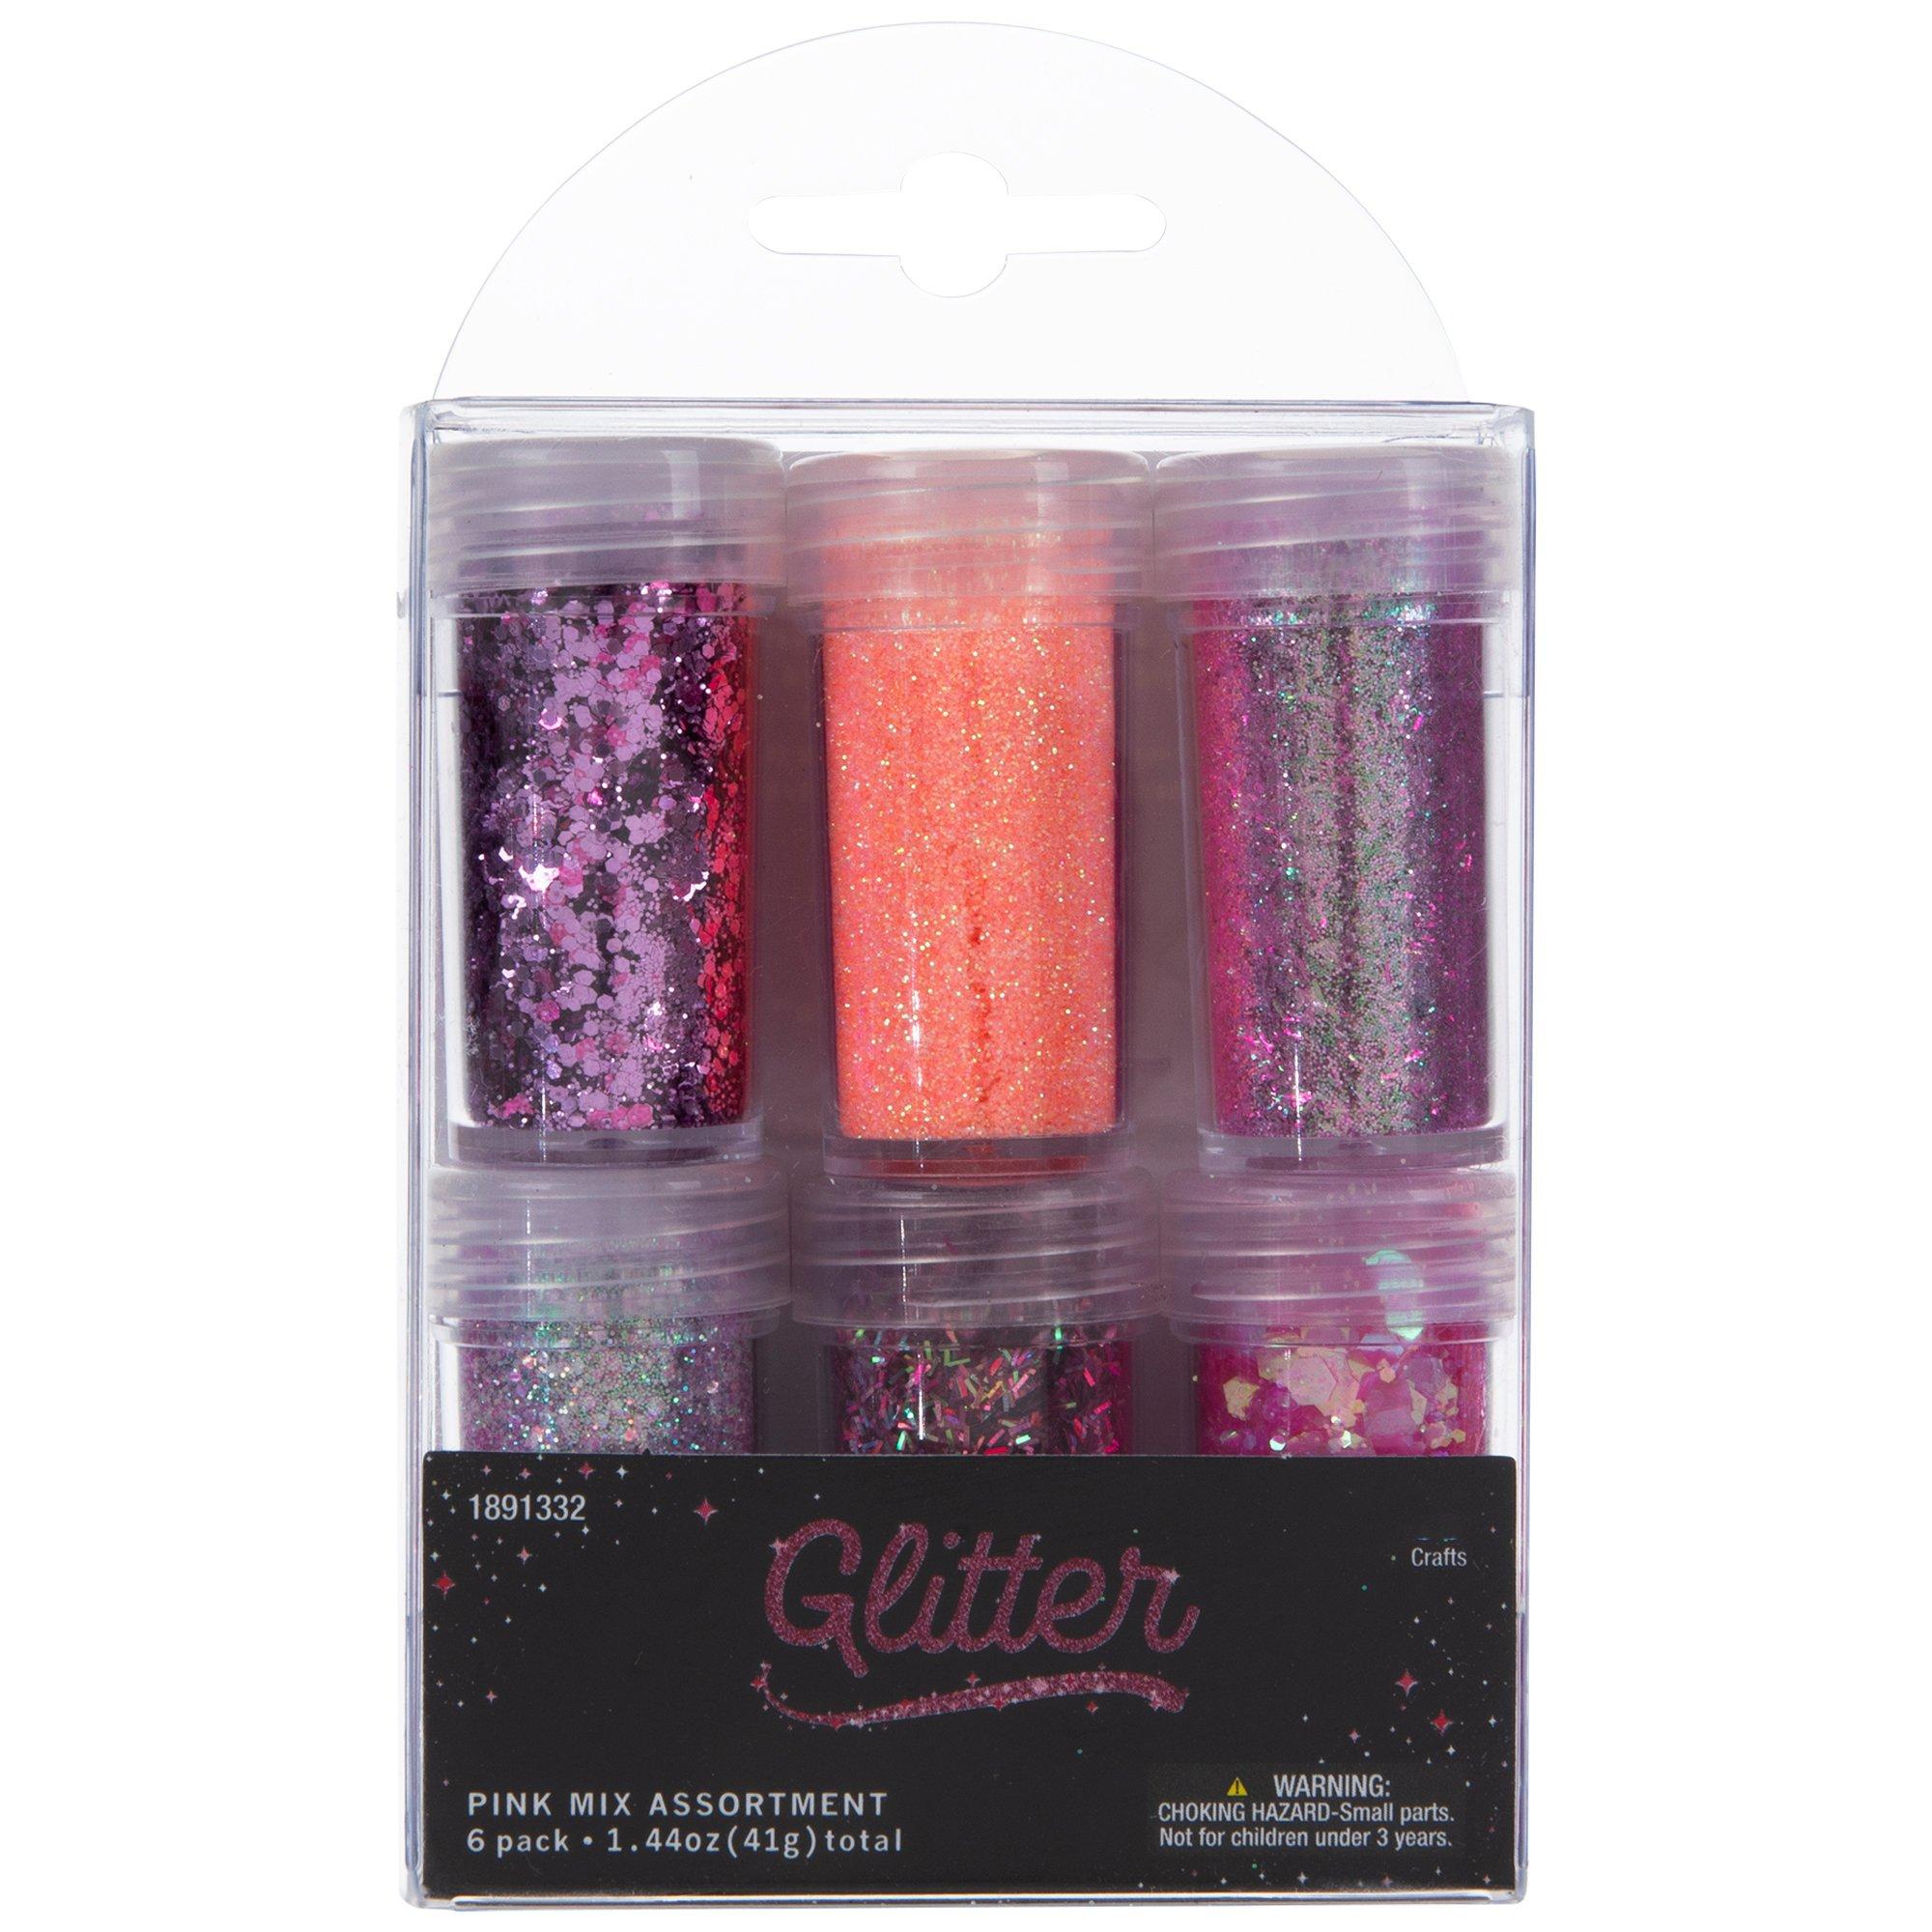 Craft Express 6 Pack 12 oz Glitter Sparkling Stain